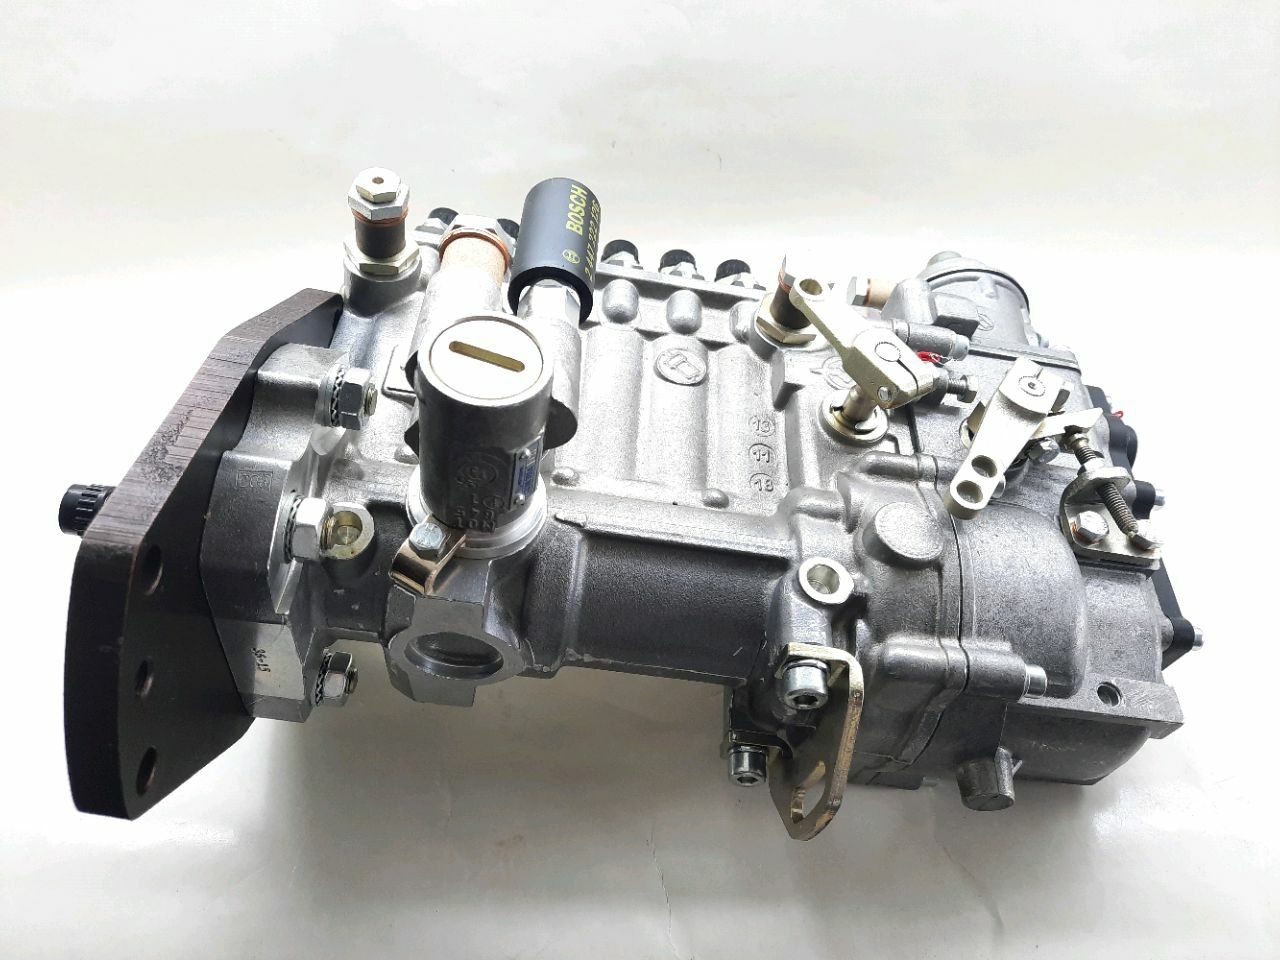 Pompa de injectie D-260 (MTZ-1221)(Motorpal)